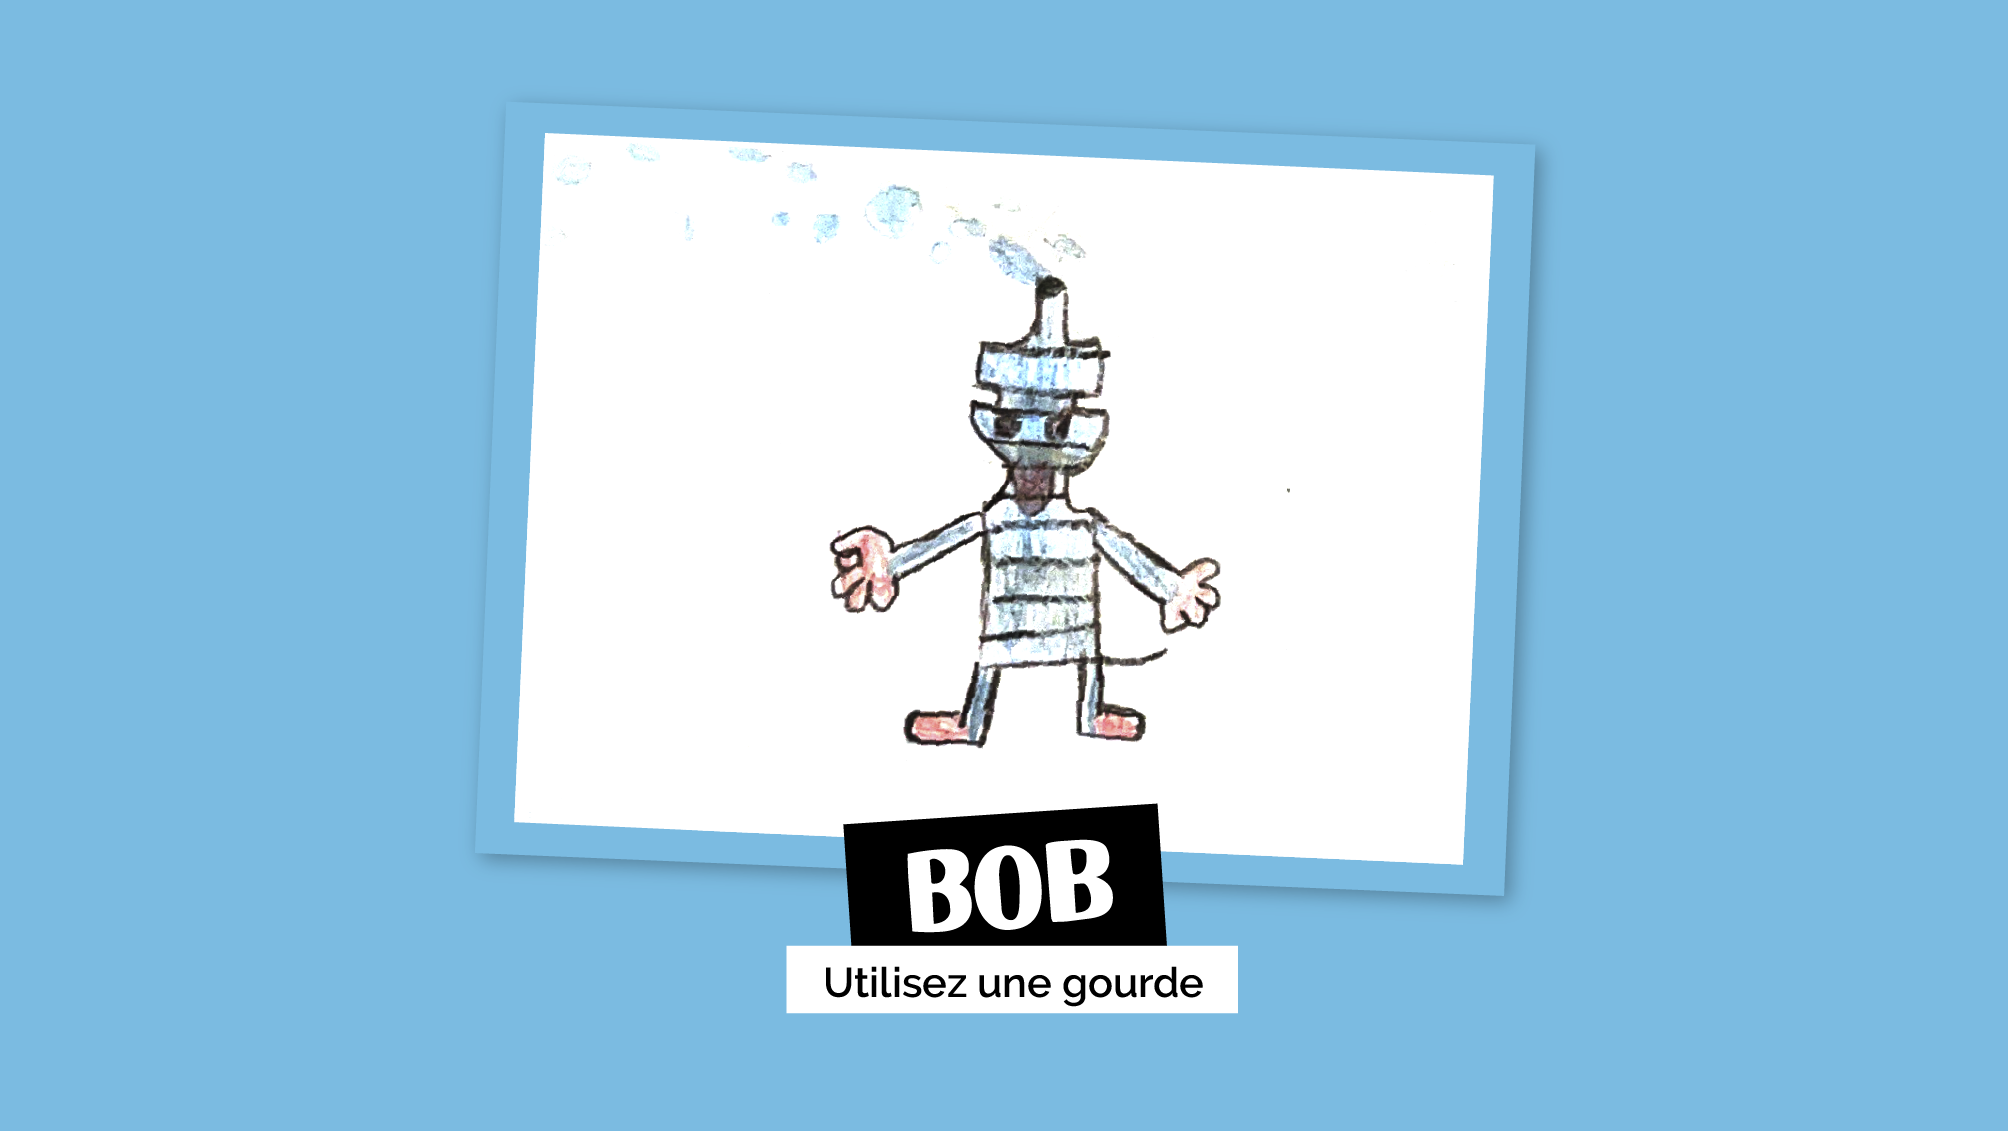 Bob - Utilisez une gourde